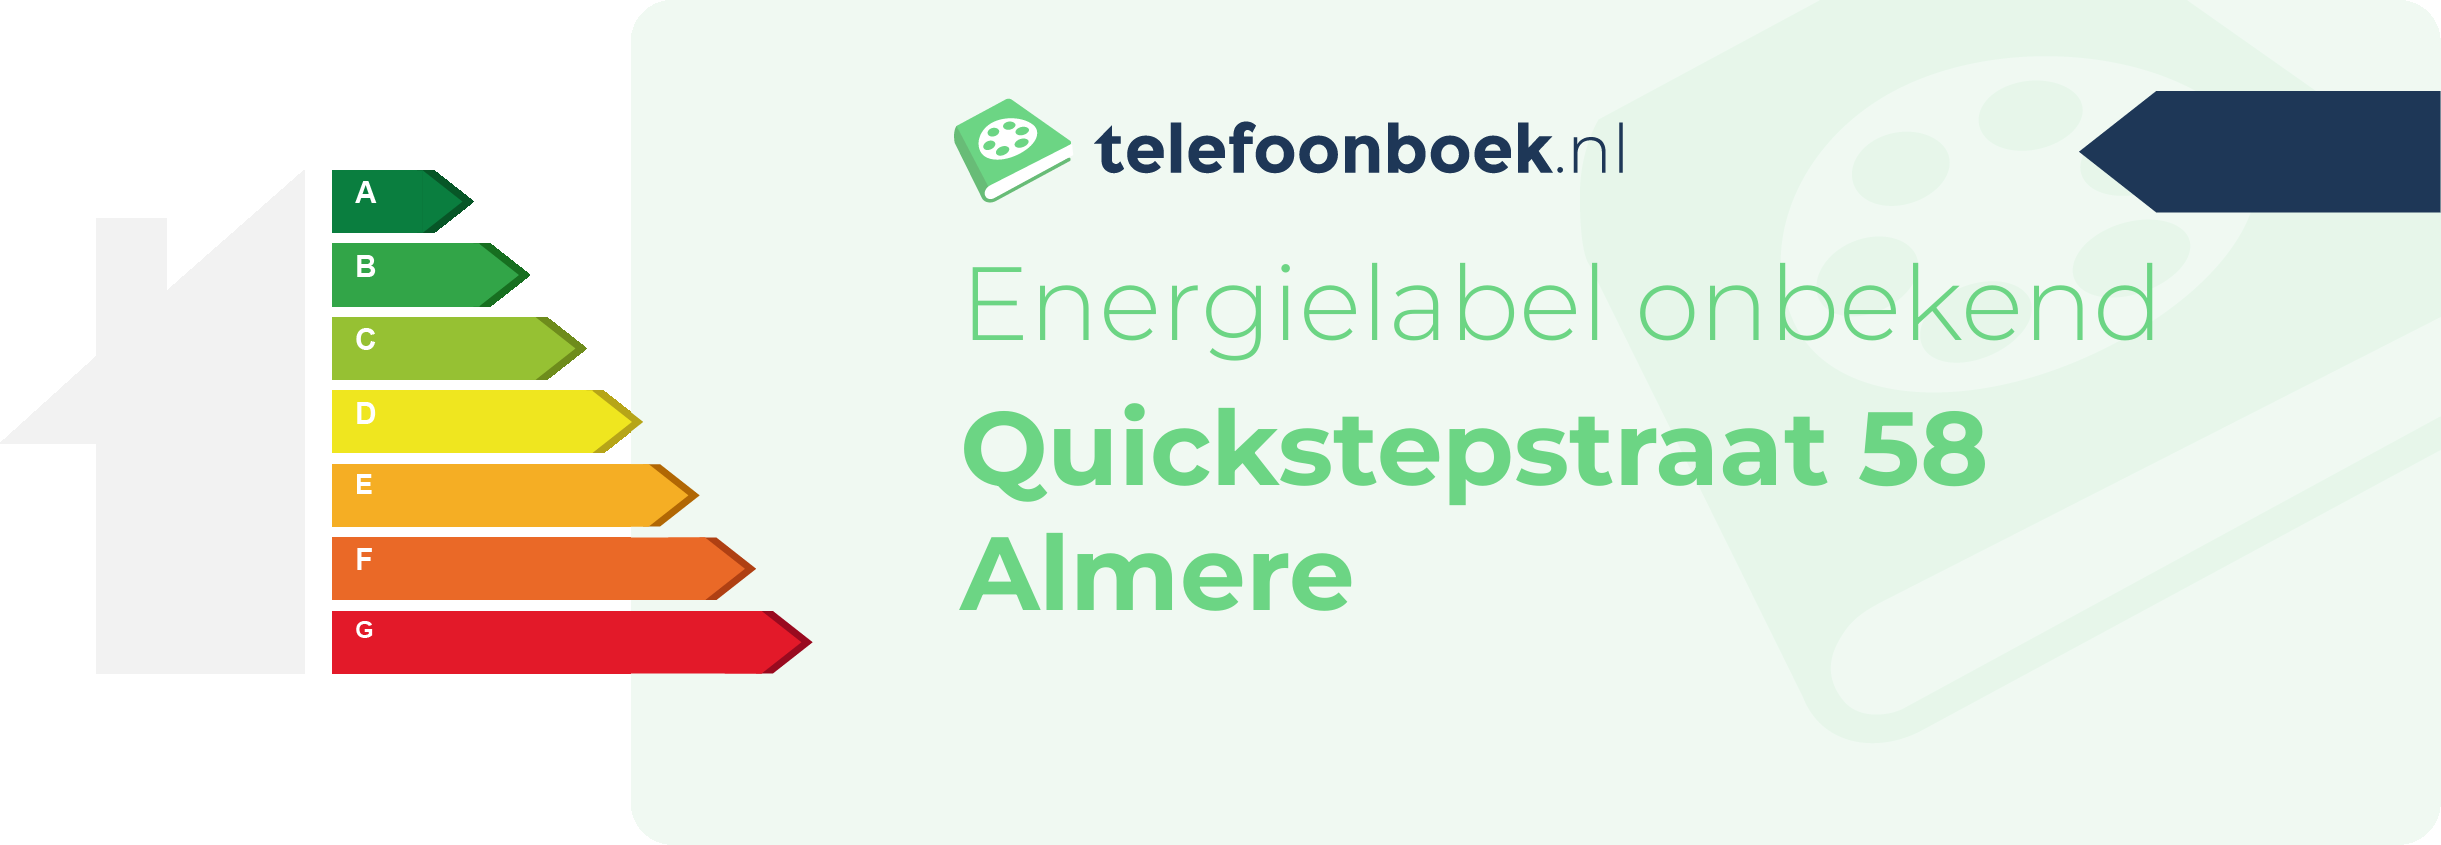 Energielabel Quickstepstraat 58 Almere